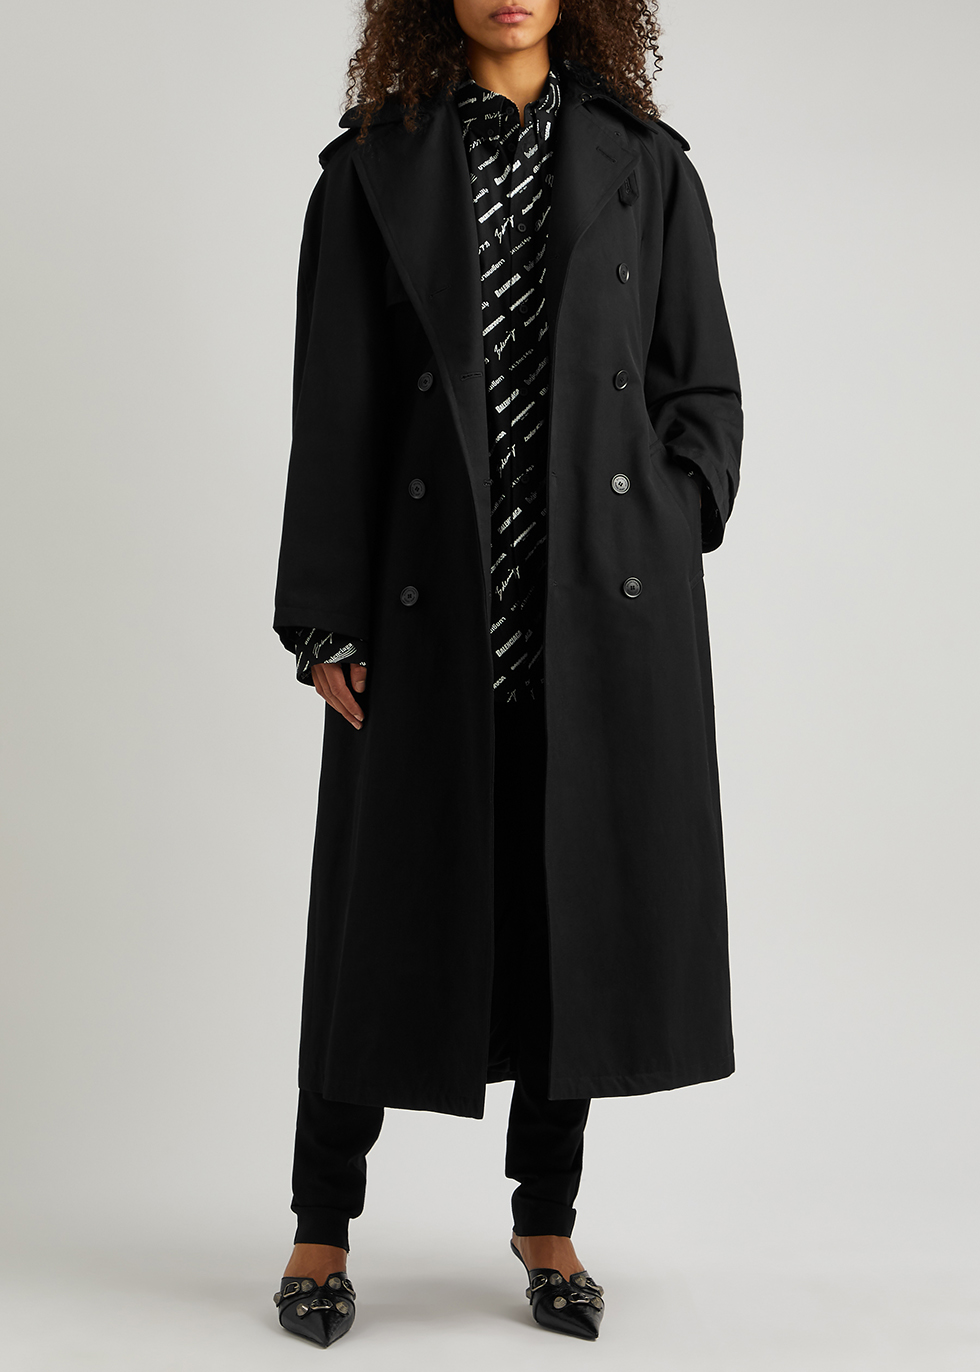 BALENCIAGA long wrinkled trench coat  Black  Balenciaga trench coat  698285 TKP06 online on GIGLIOCOM